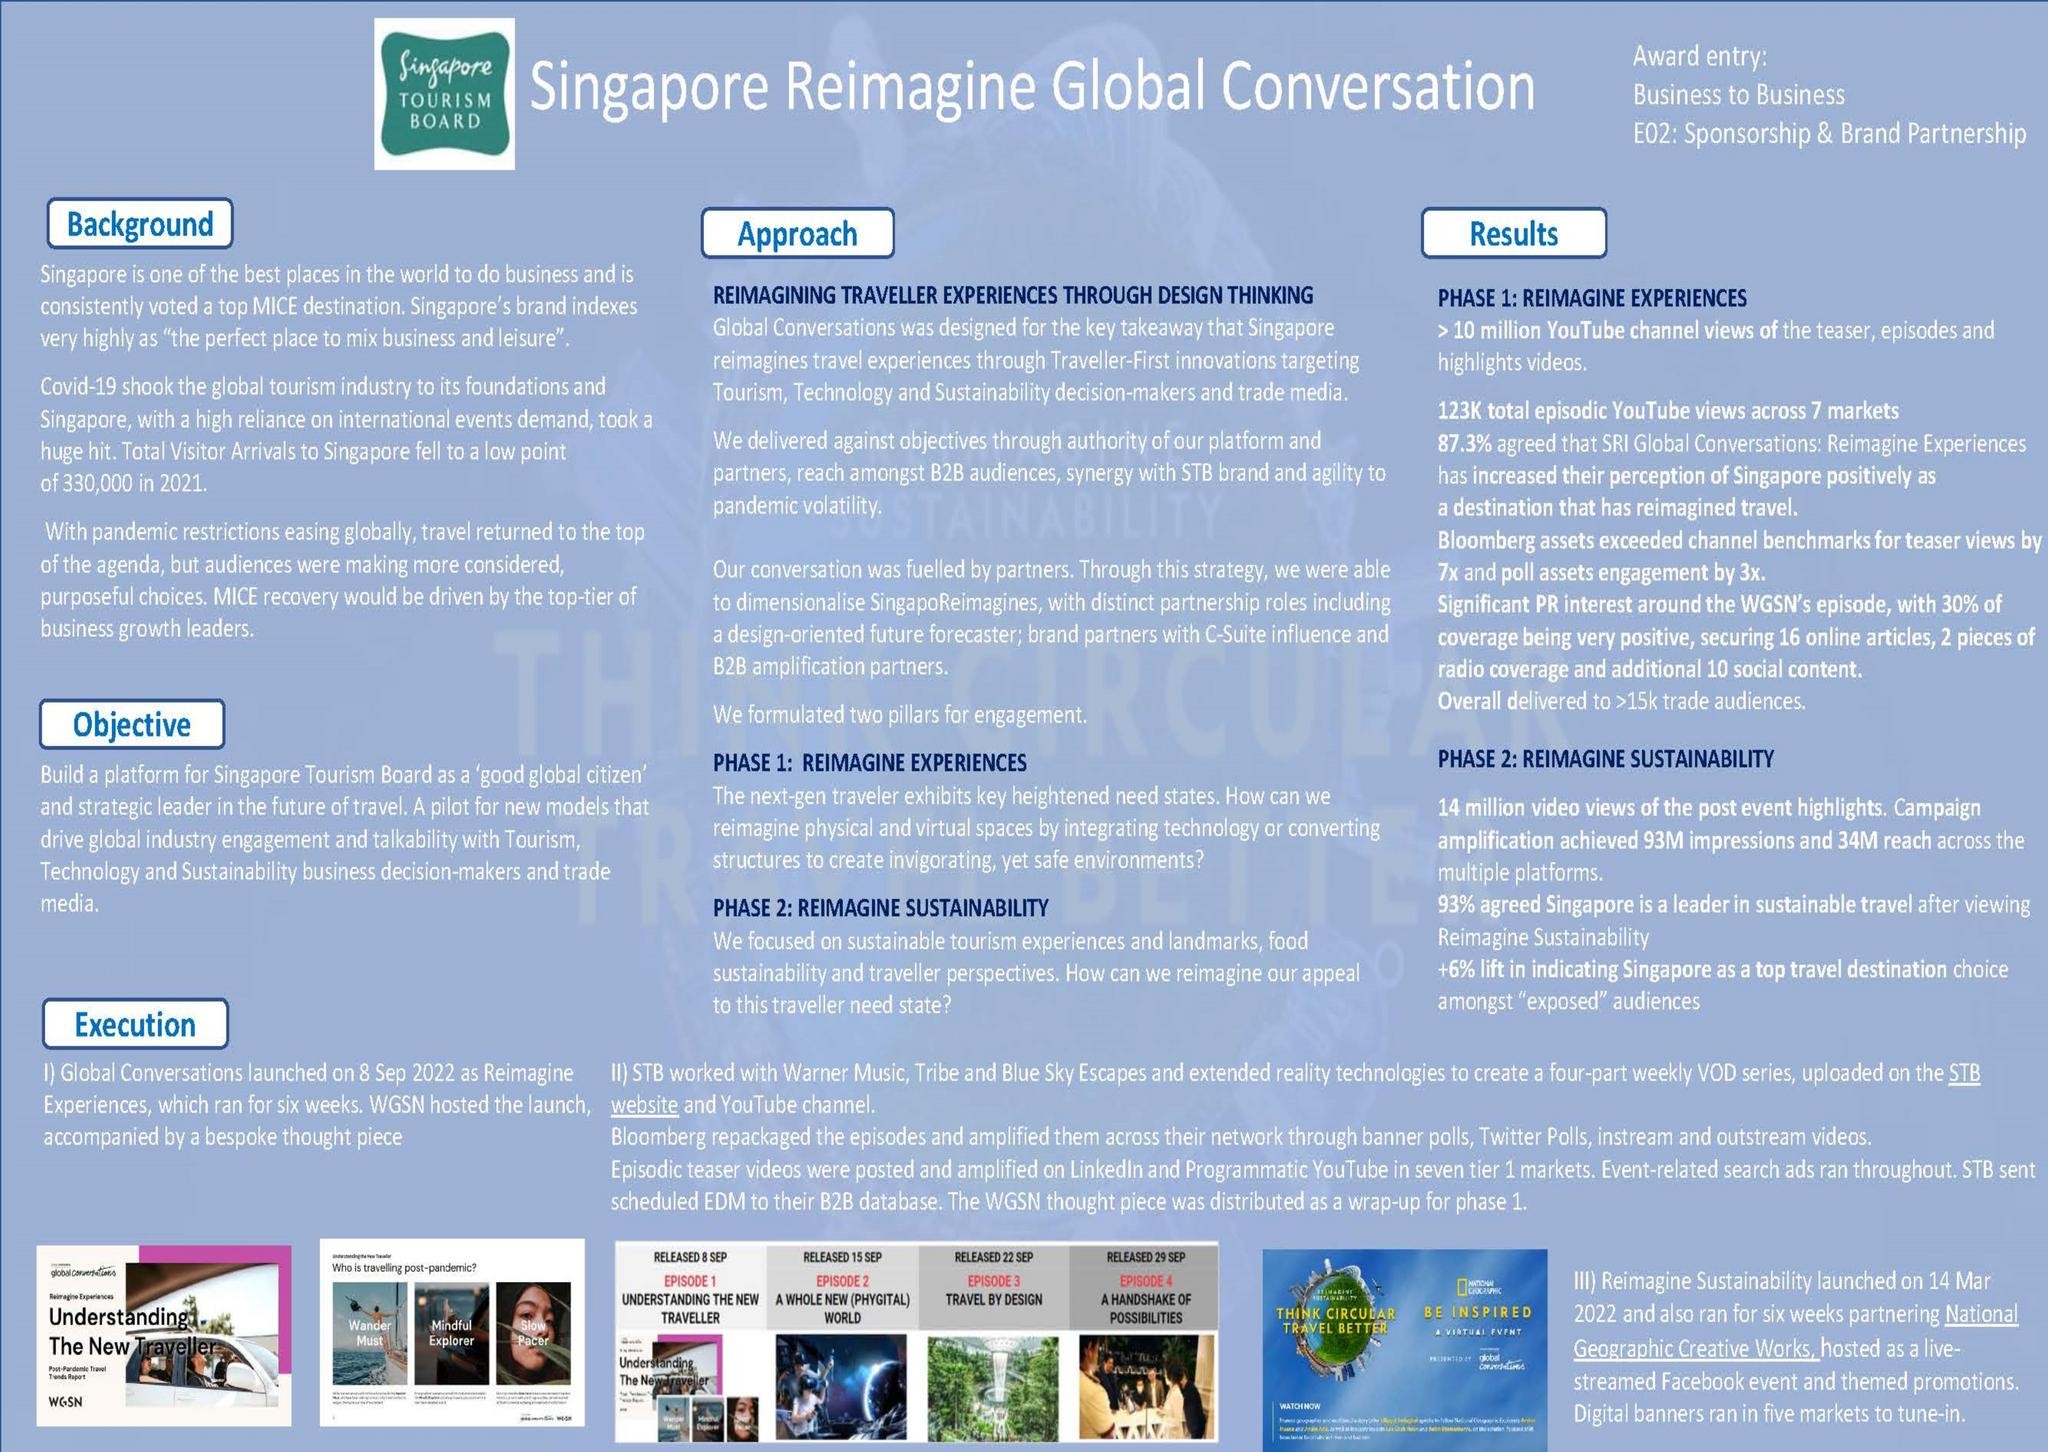 Singapore Tourism Board: Singapore Reimagine Global Conversation